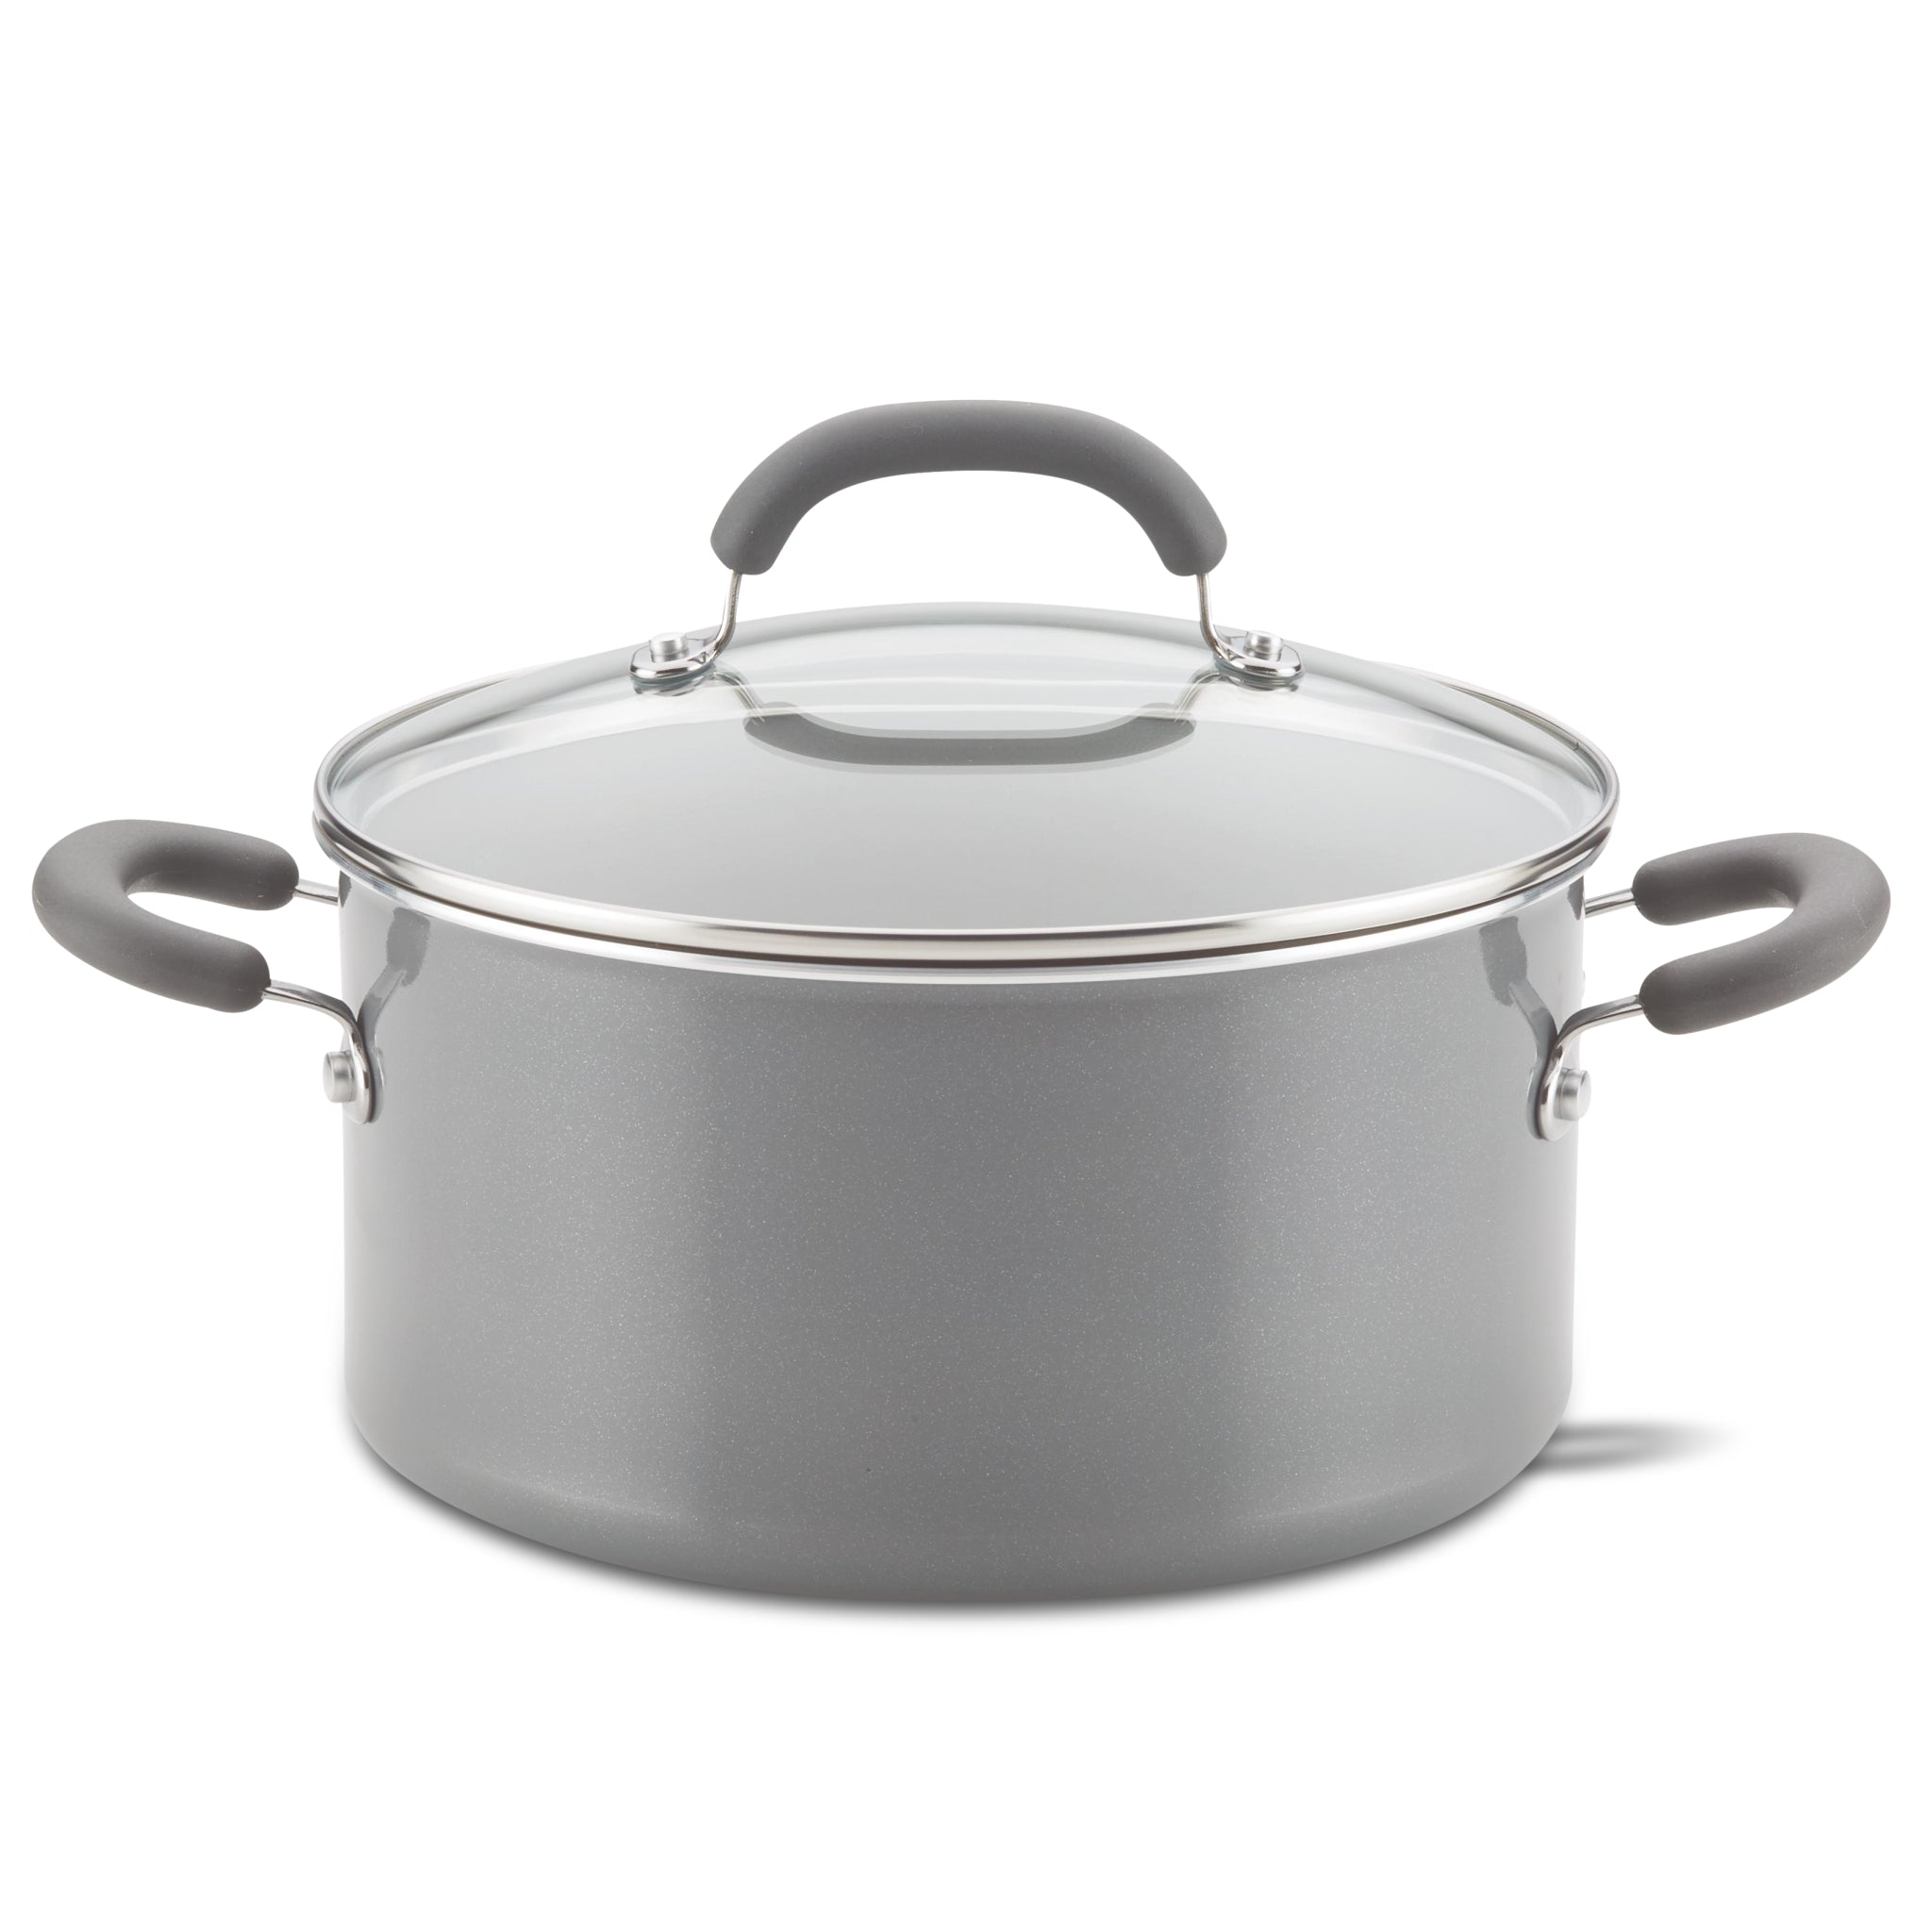 N++A Nonstick Stock Pot with Lid, 6 Quart Cooking Pot Non Stick Soup Pot with Lid, 6 qt Induction Pasta Pot with Ergonomic Handle, All Stove